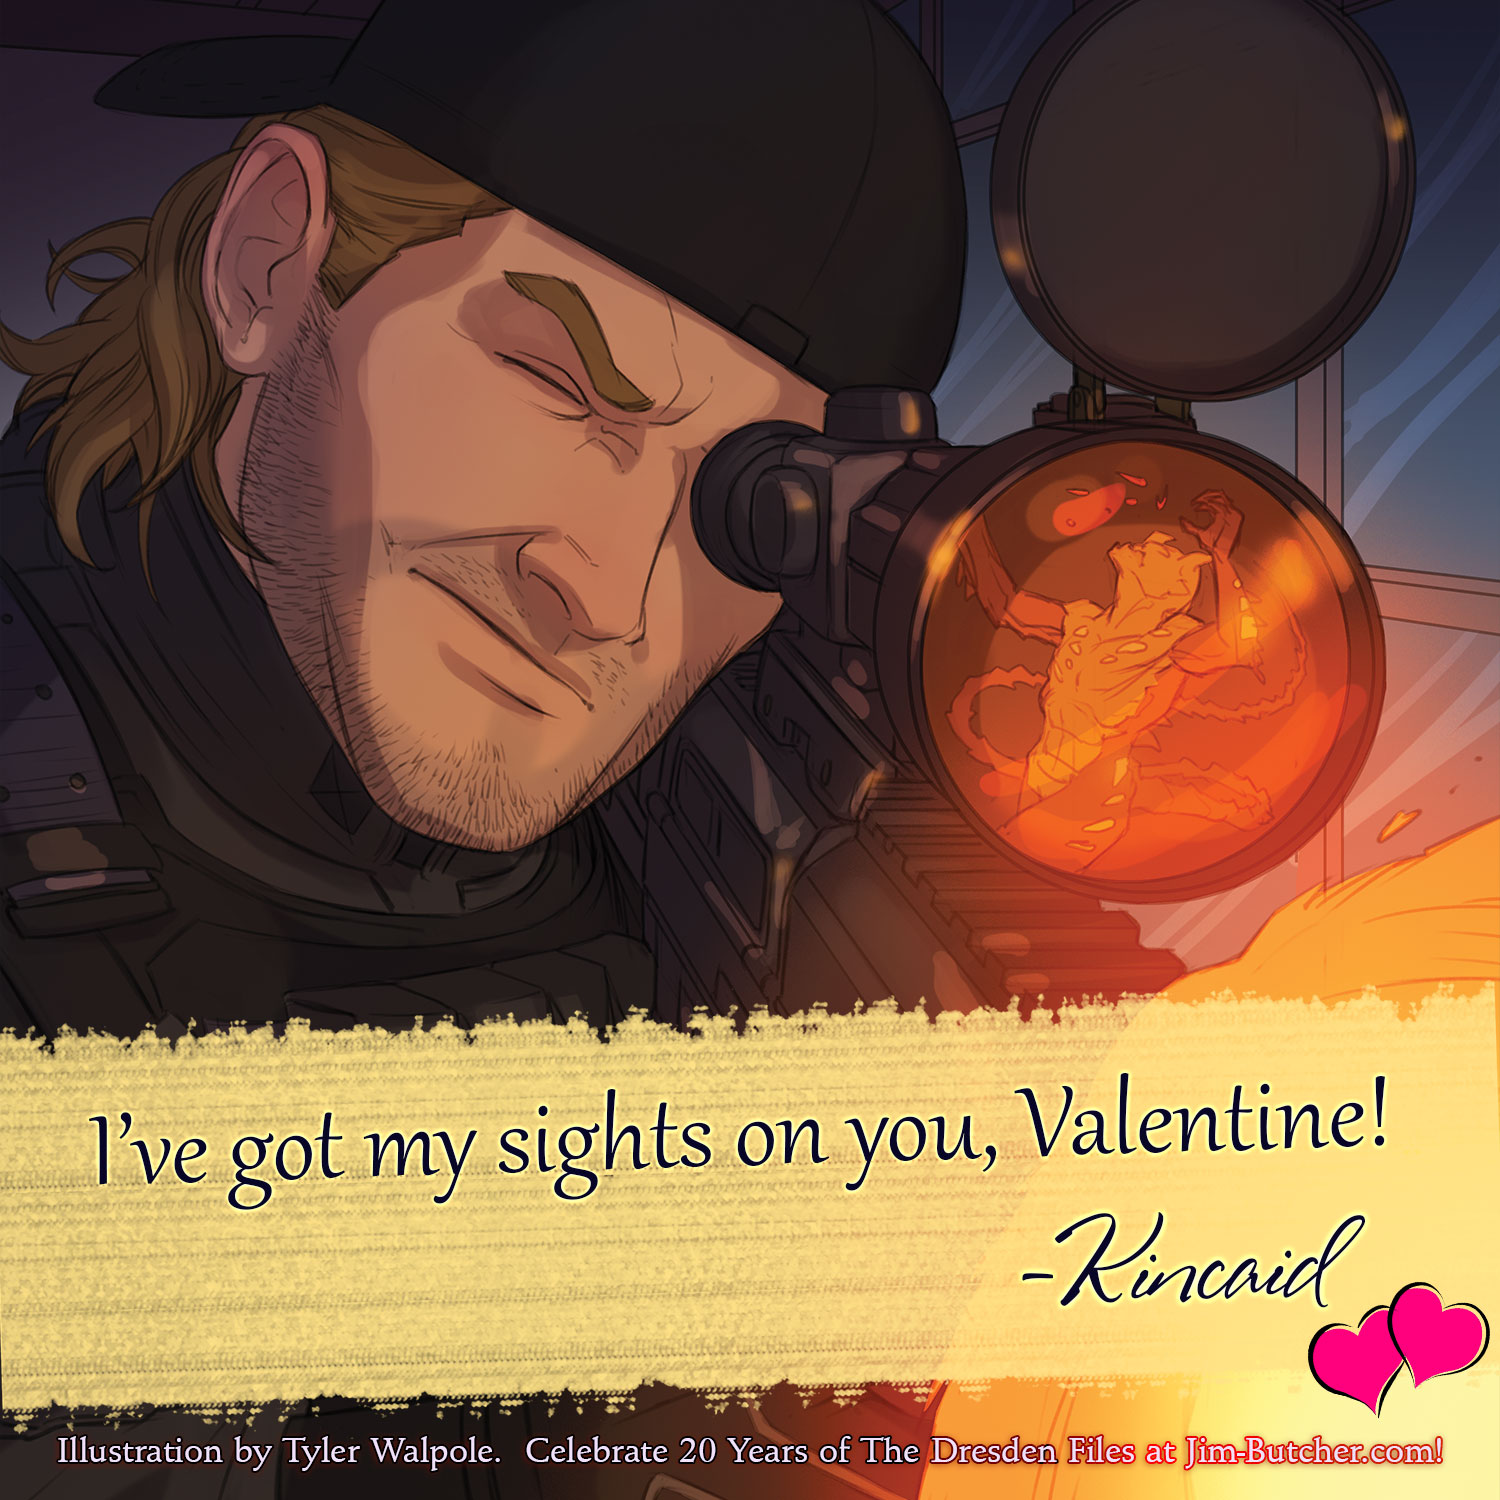 Kincaid: I've got my sights on you, Valentine!